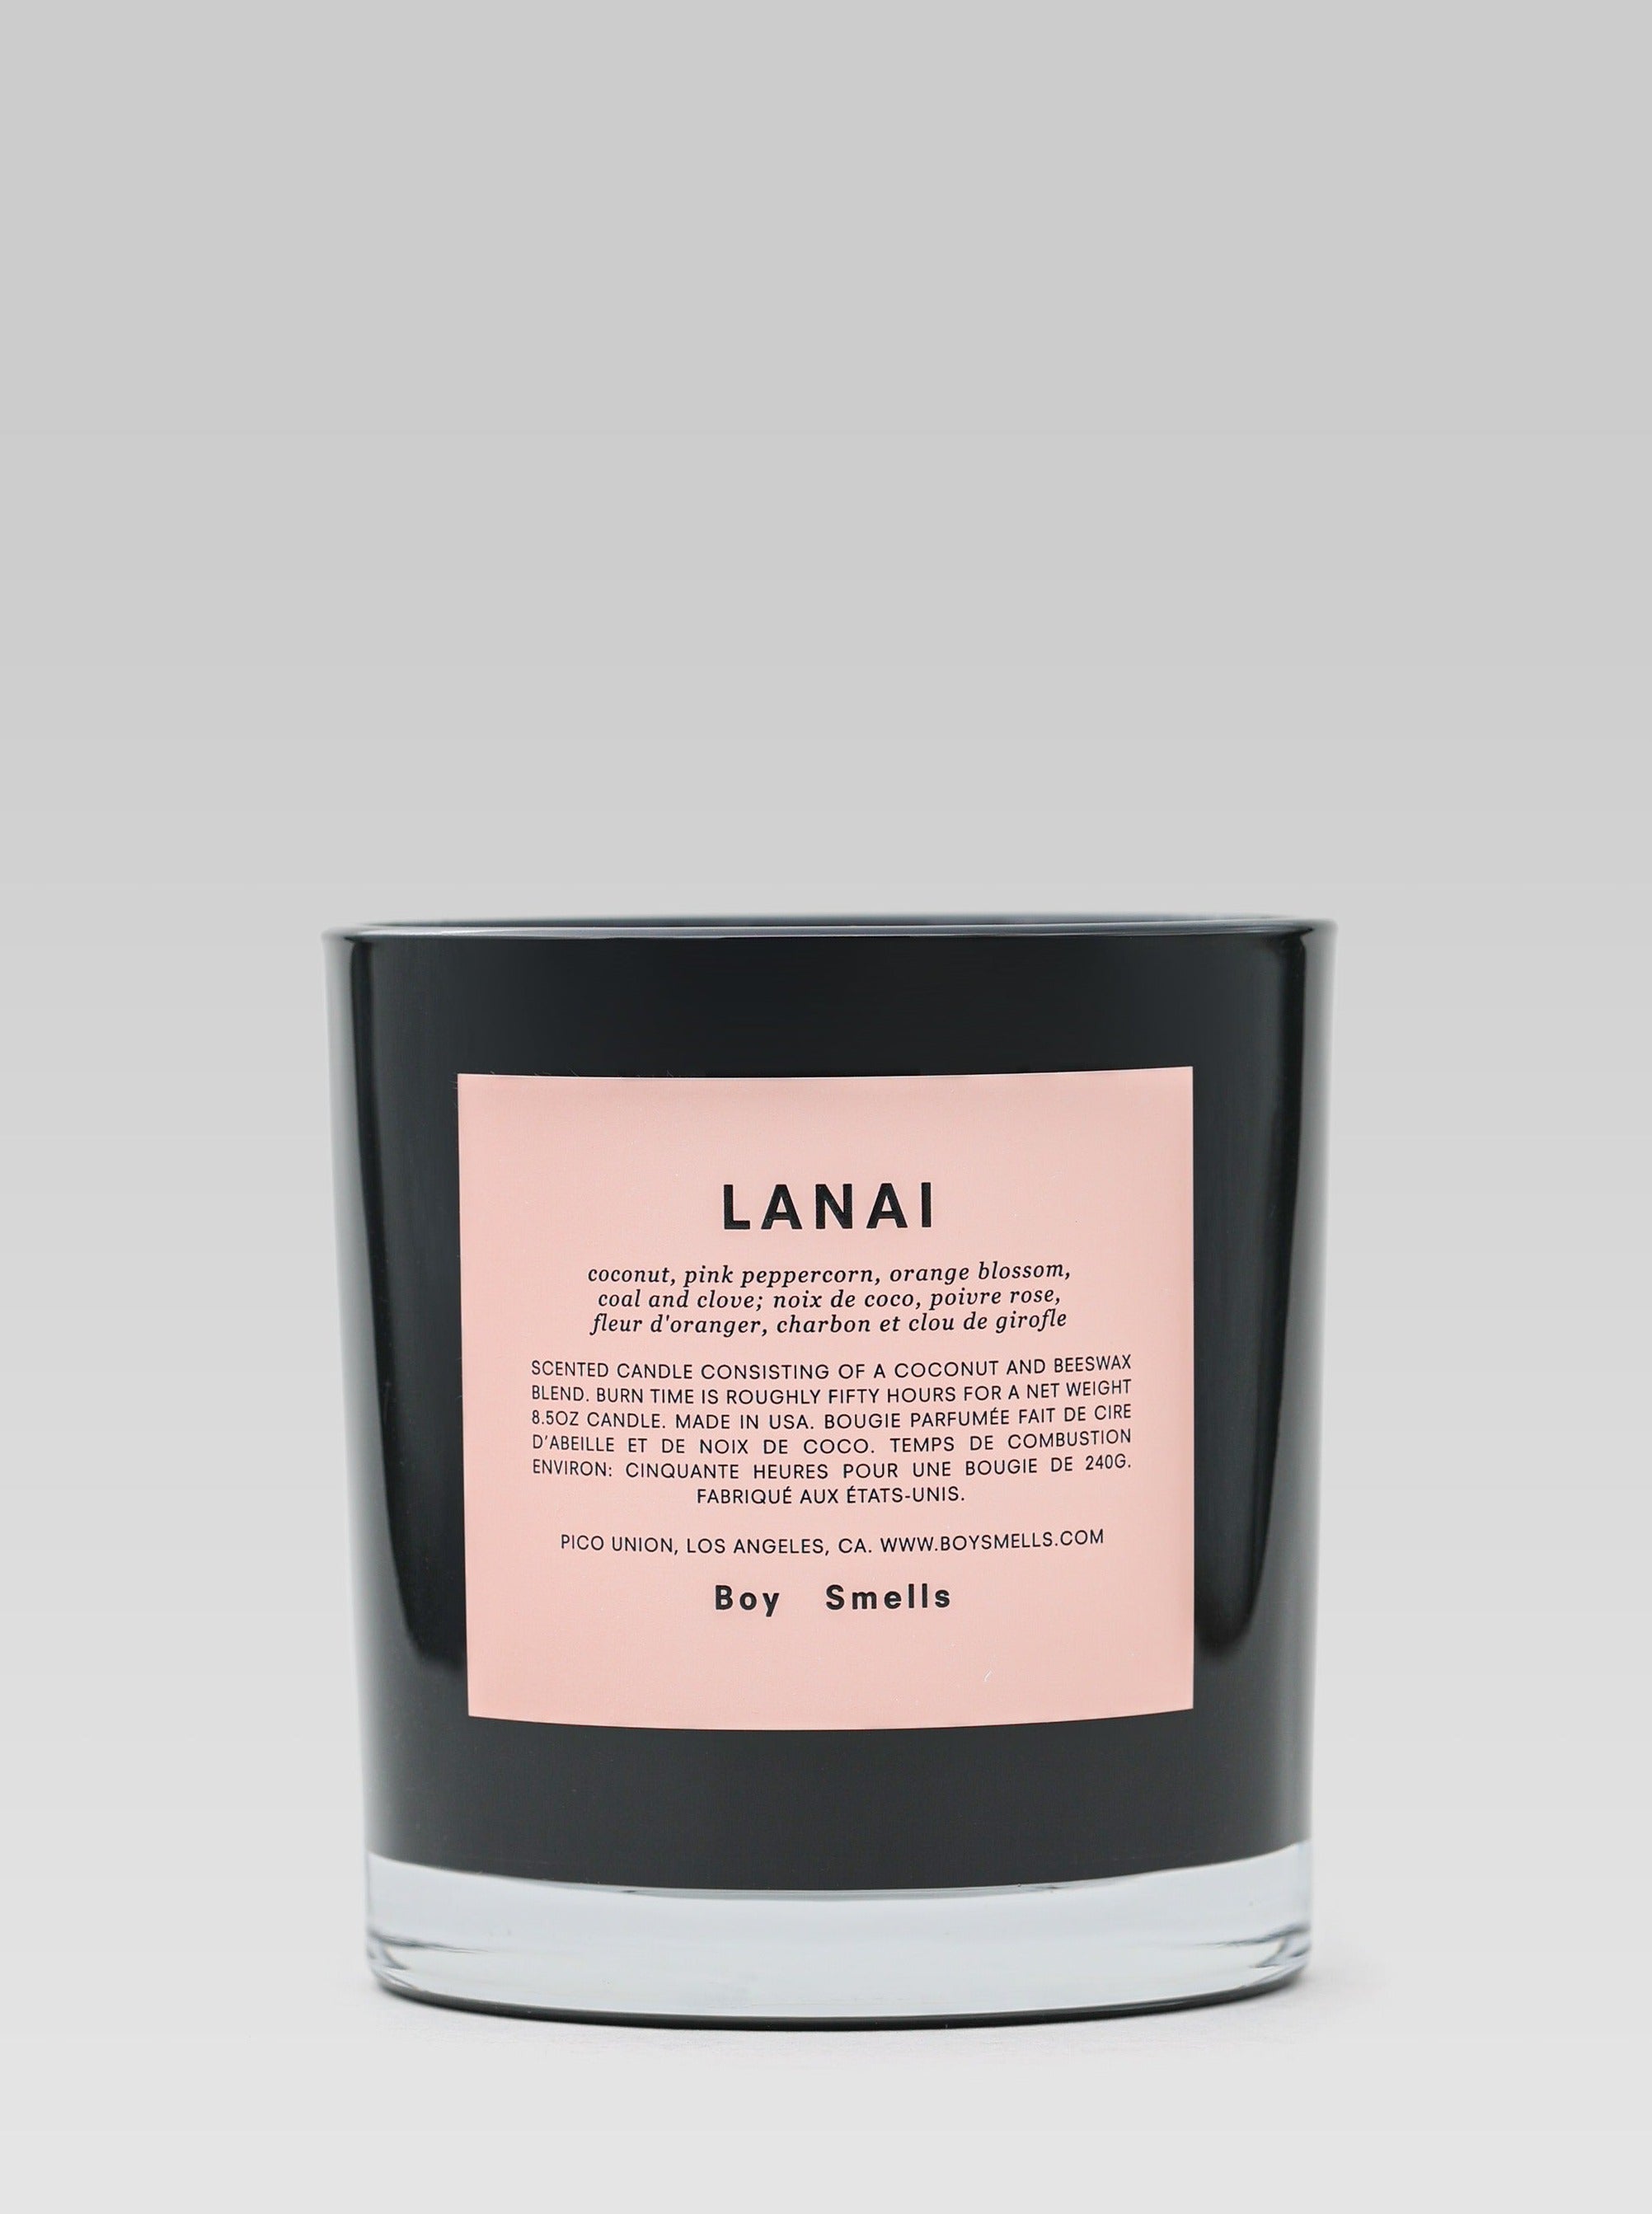 Boy Smells Lanai candle product shot